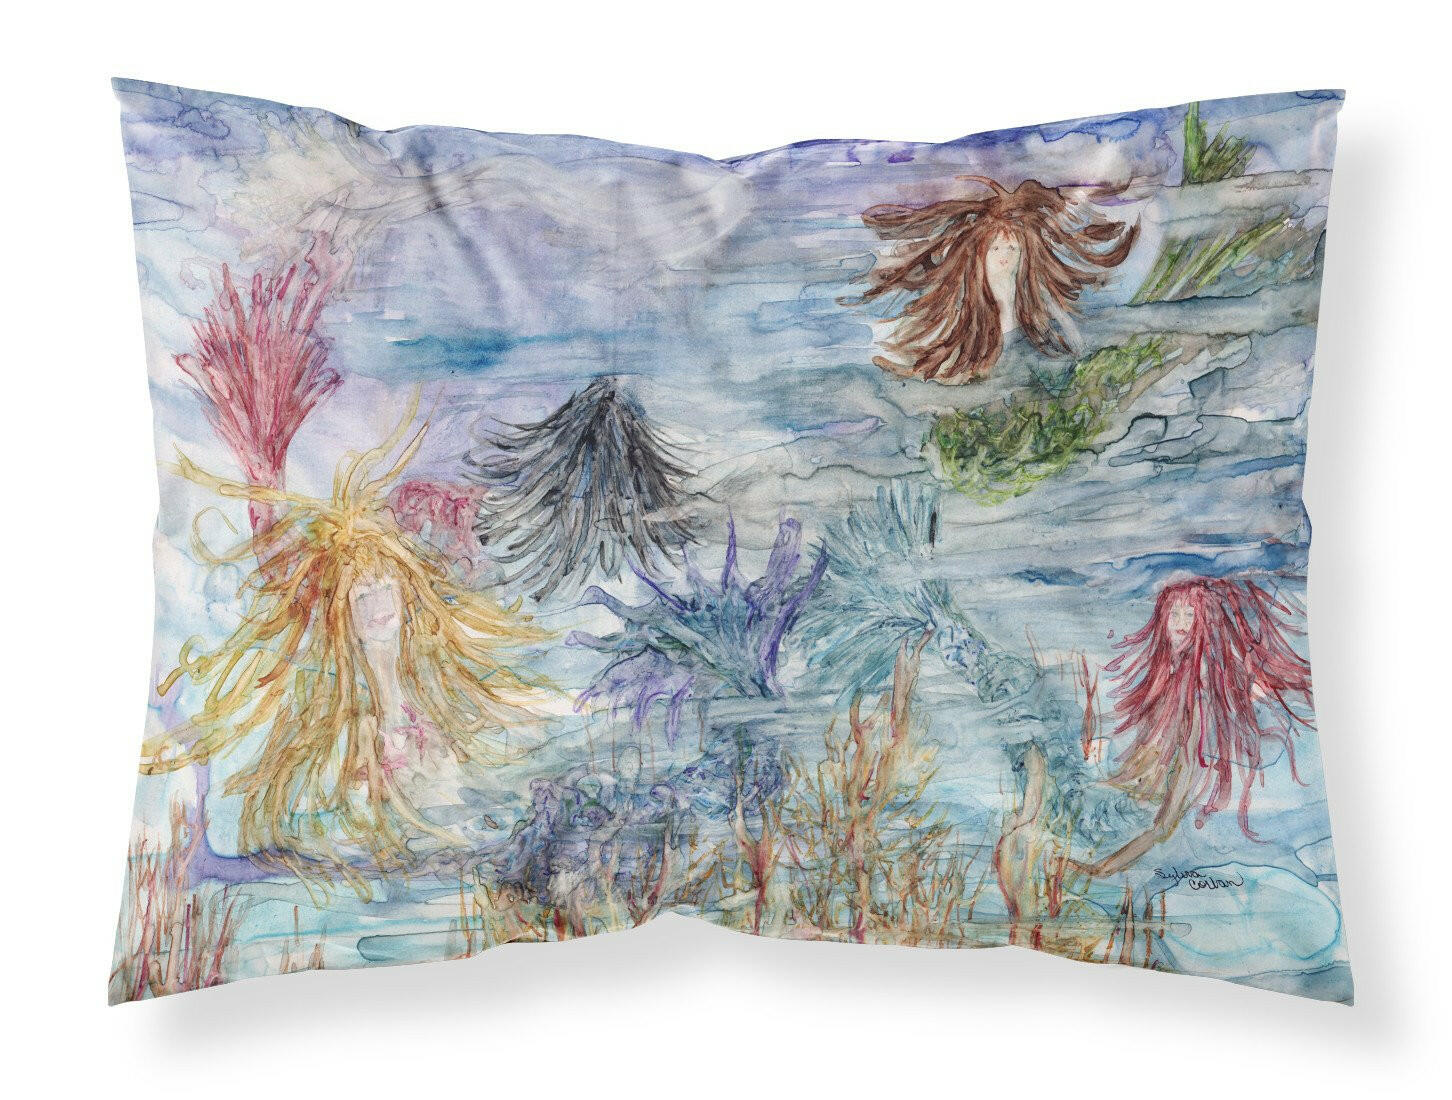 Abstract Mermaid Water Fantasy Fabric Standard Pillowcase 8975PILLOWCASE by Caroline's Treasures